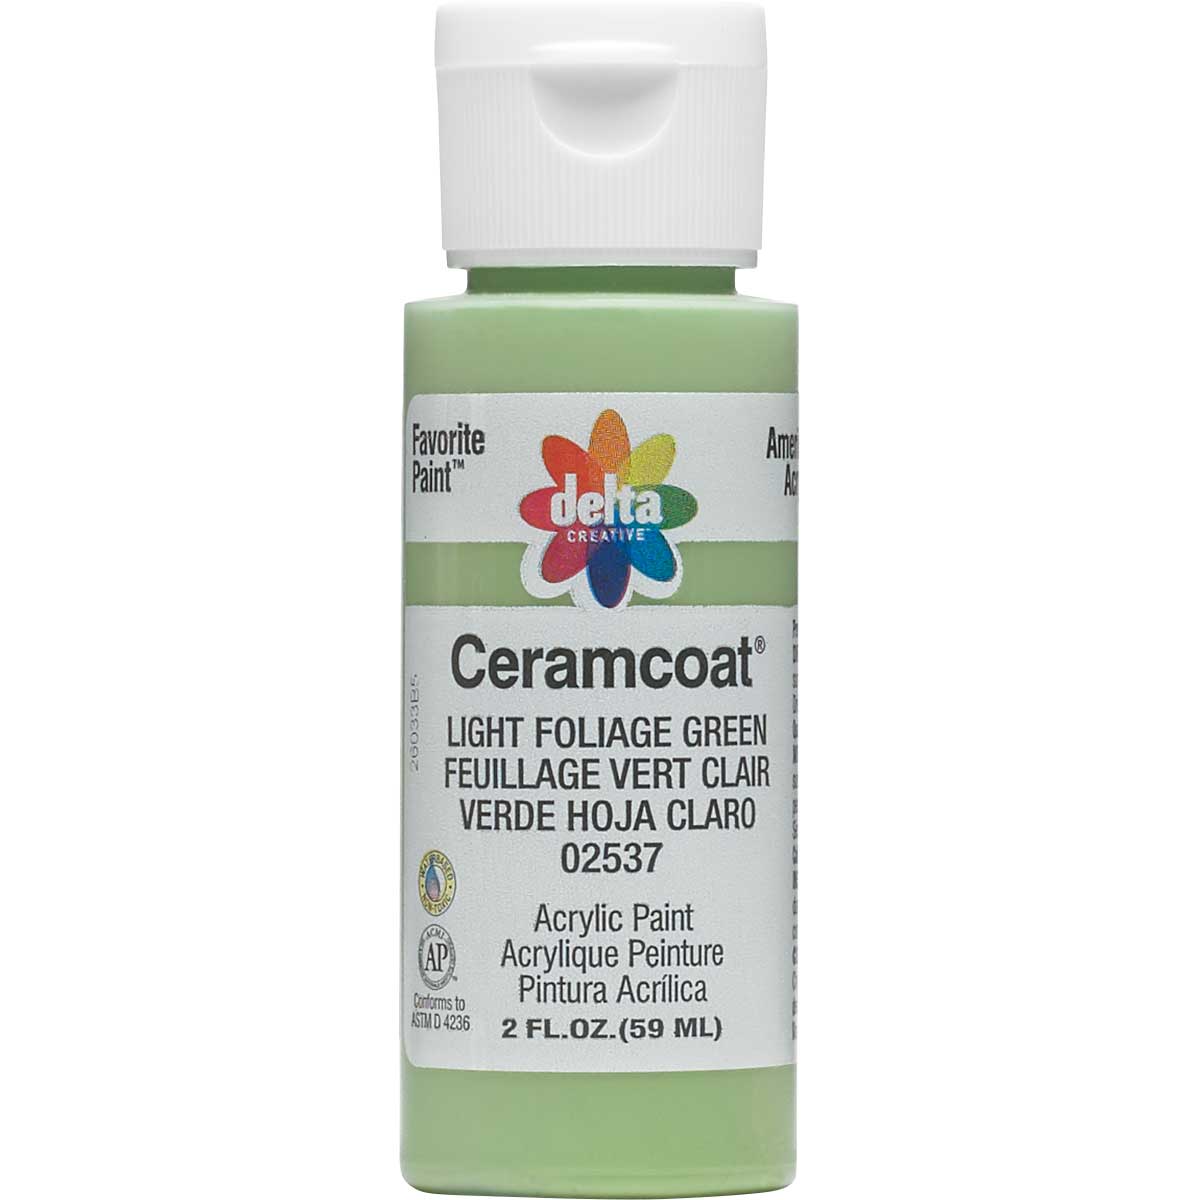 Delta Ceramcoat Acrylic Paint 2oz-Light Foliage Green - Opaque